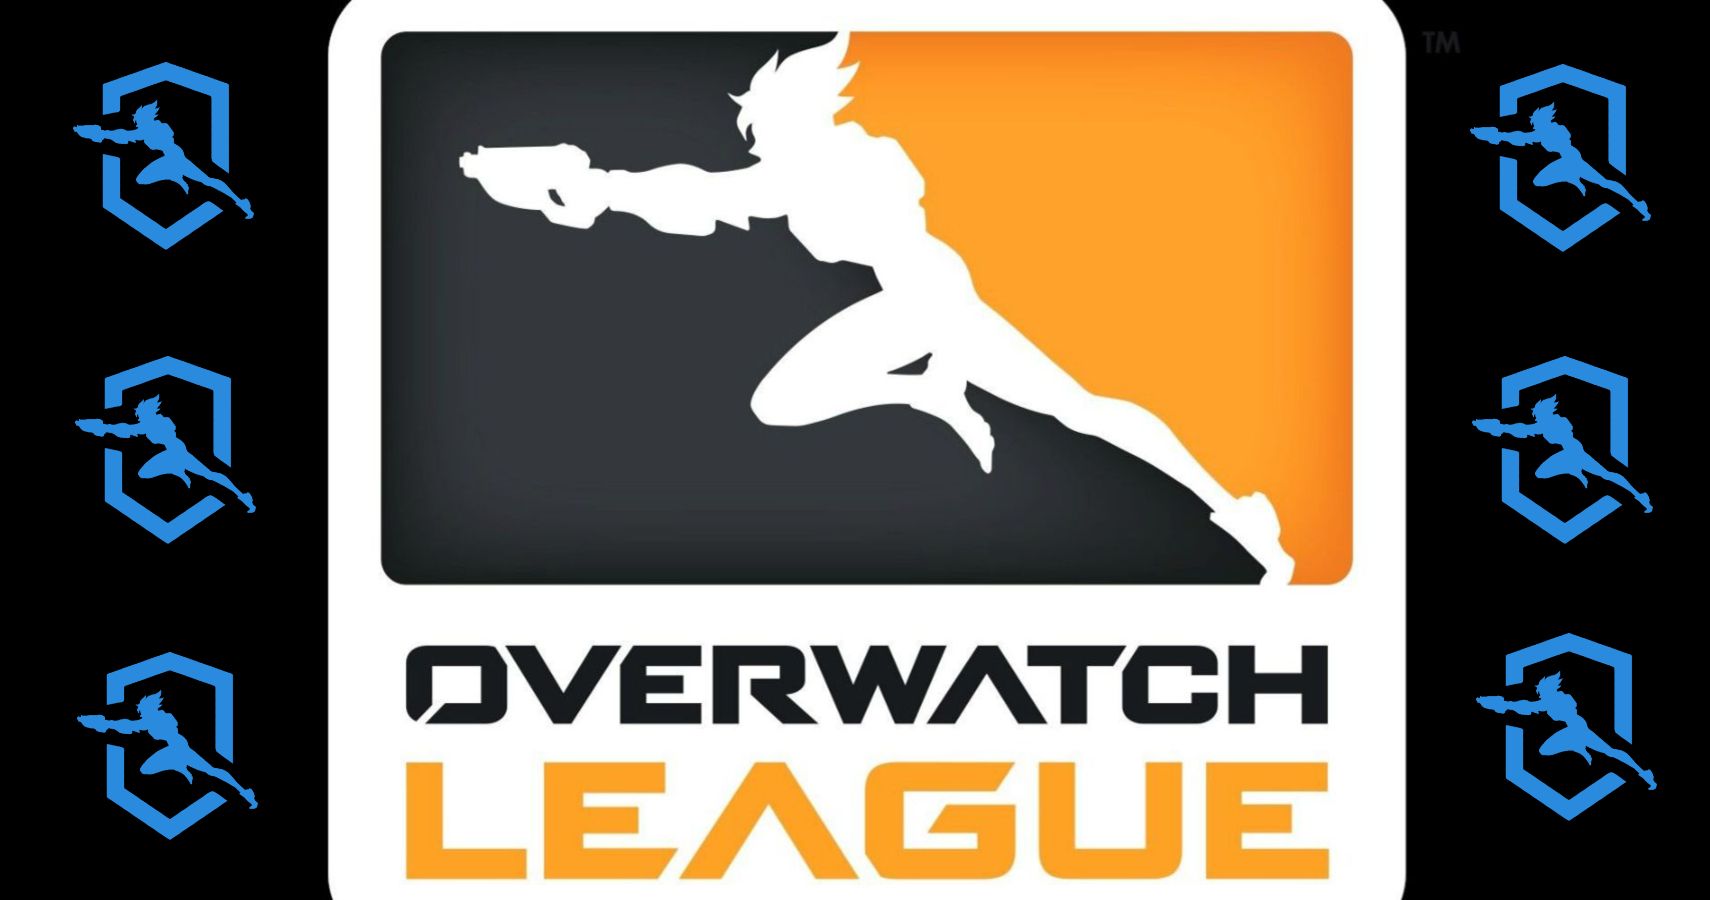 overwatch league newsletter tokens